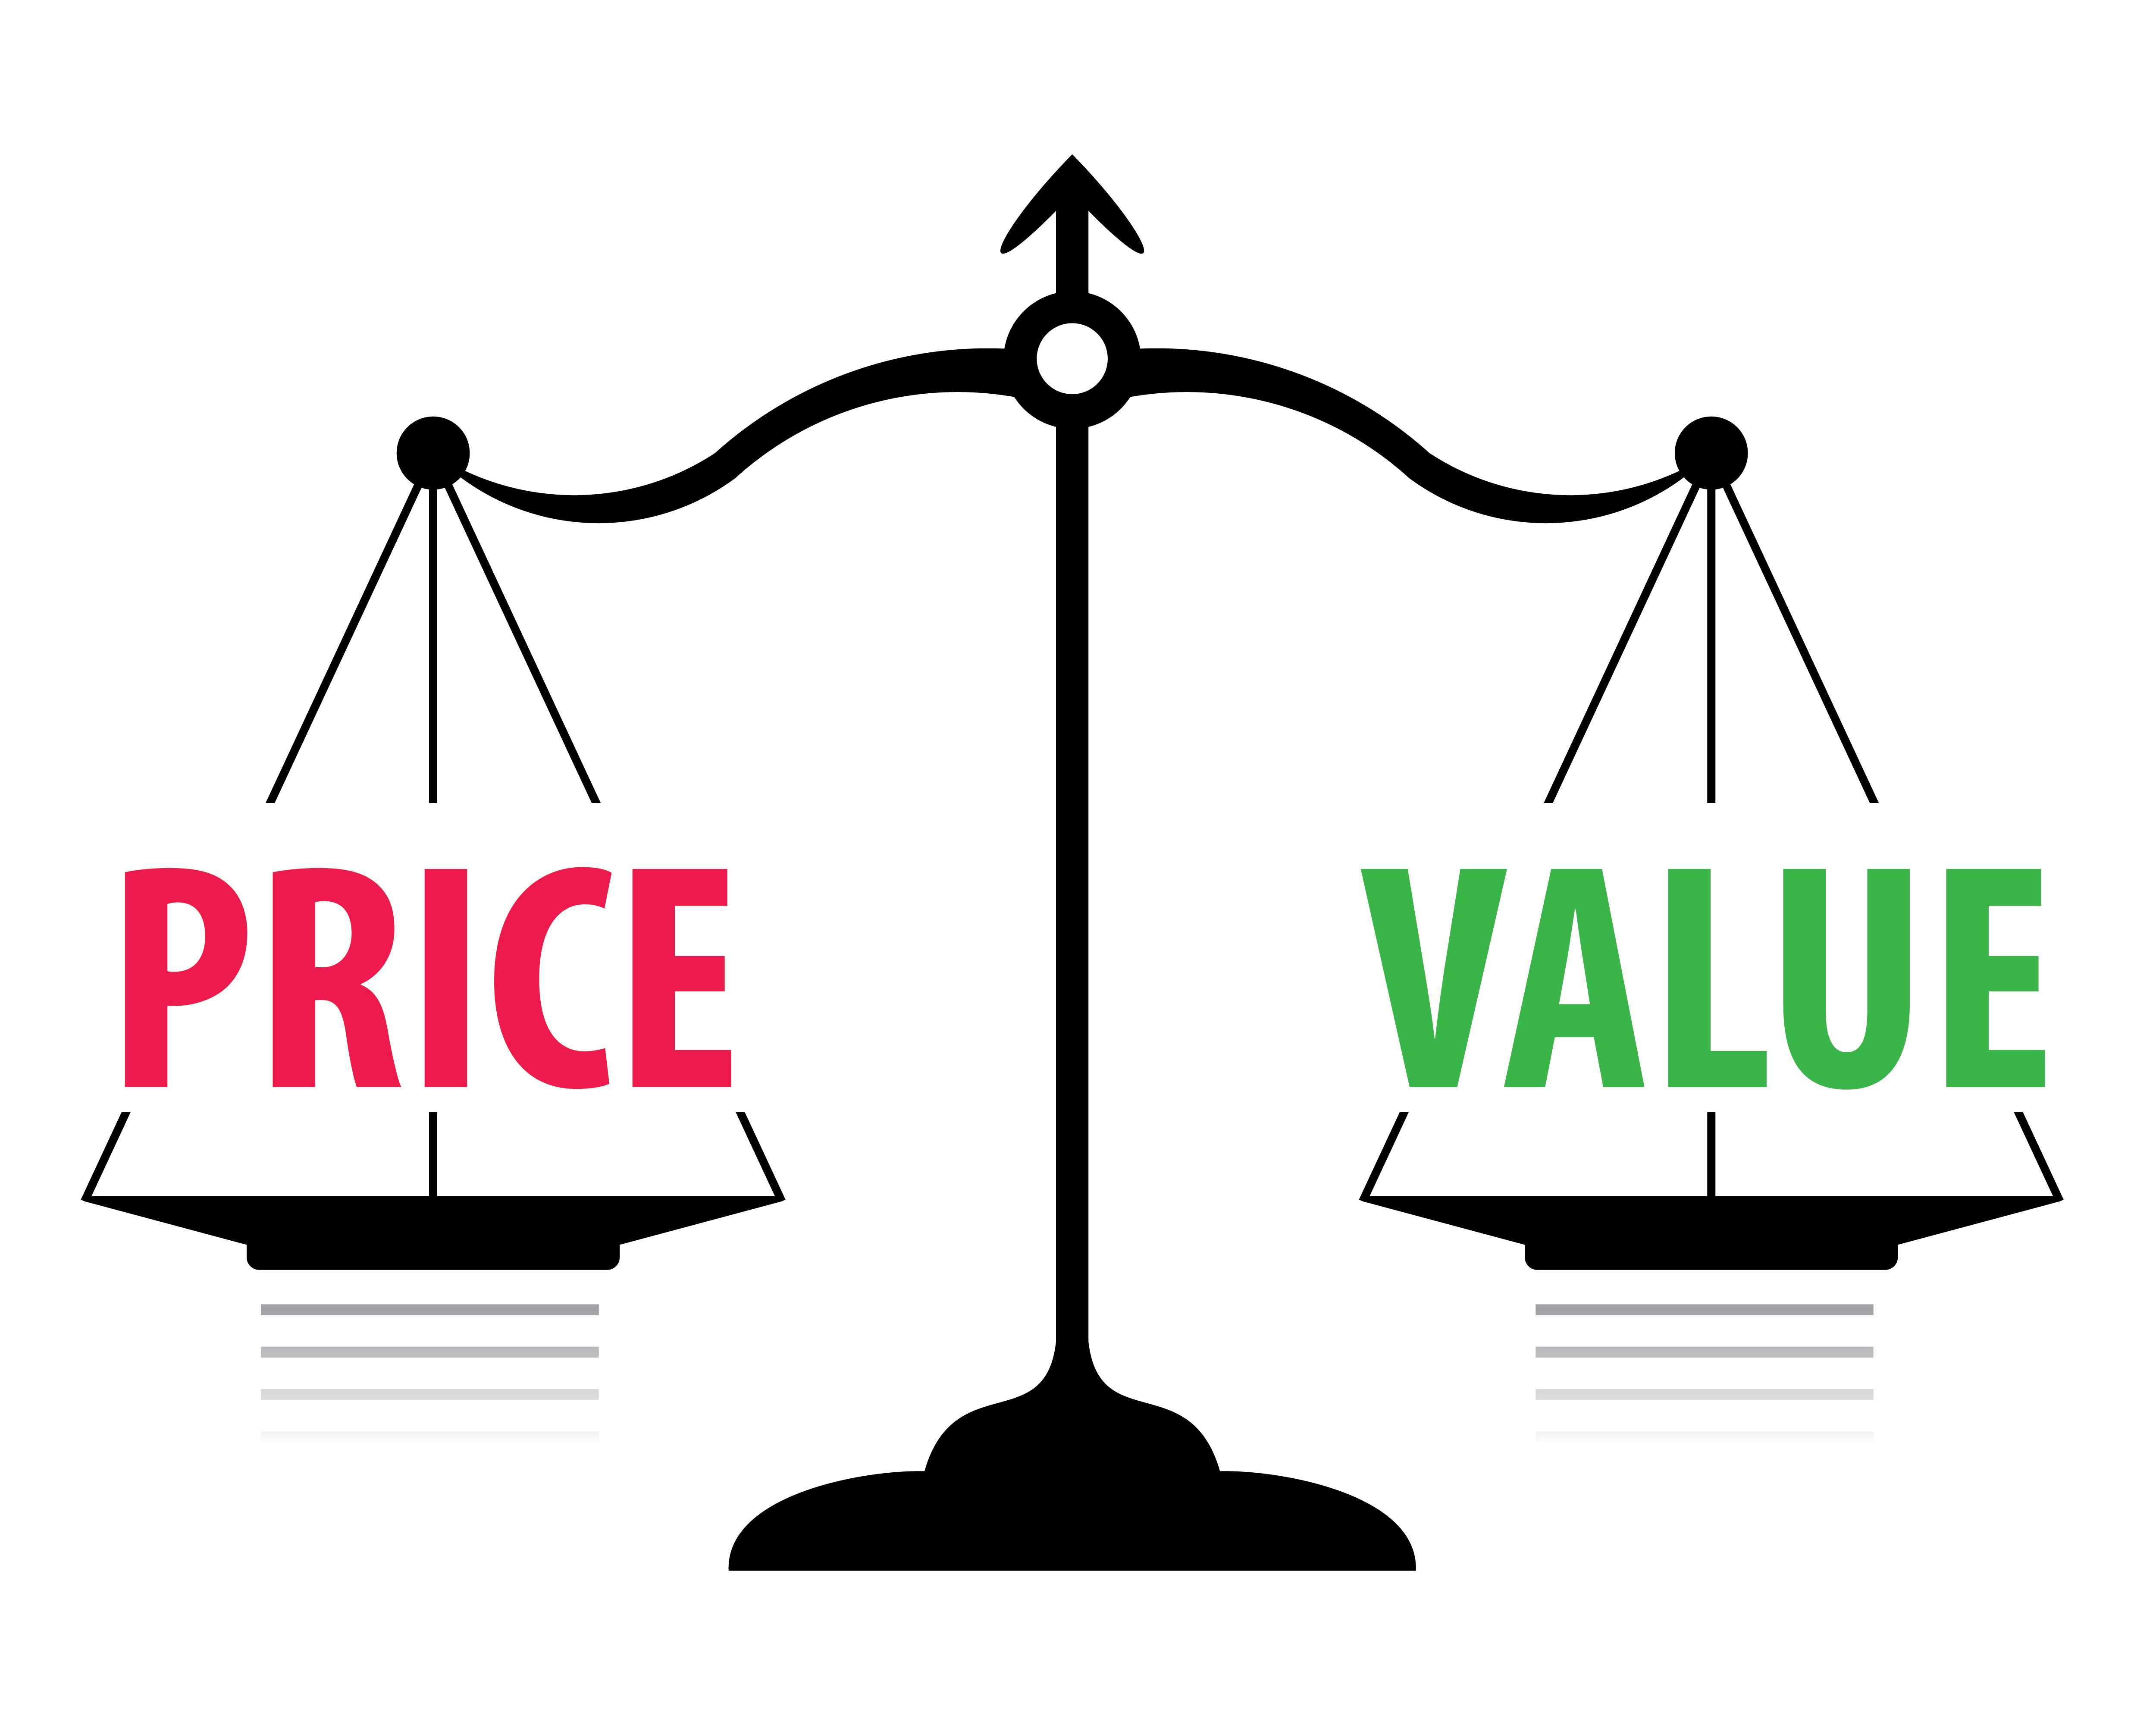 Value цена. Value Price. Картинка value Price. Ценность и стоимость. Цена и ценность картинки.